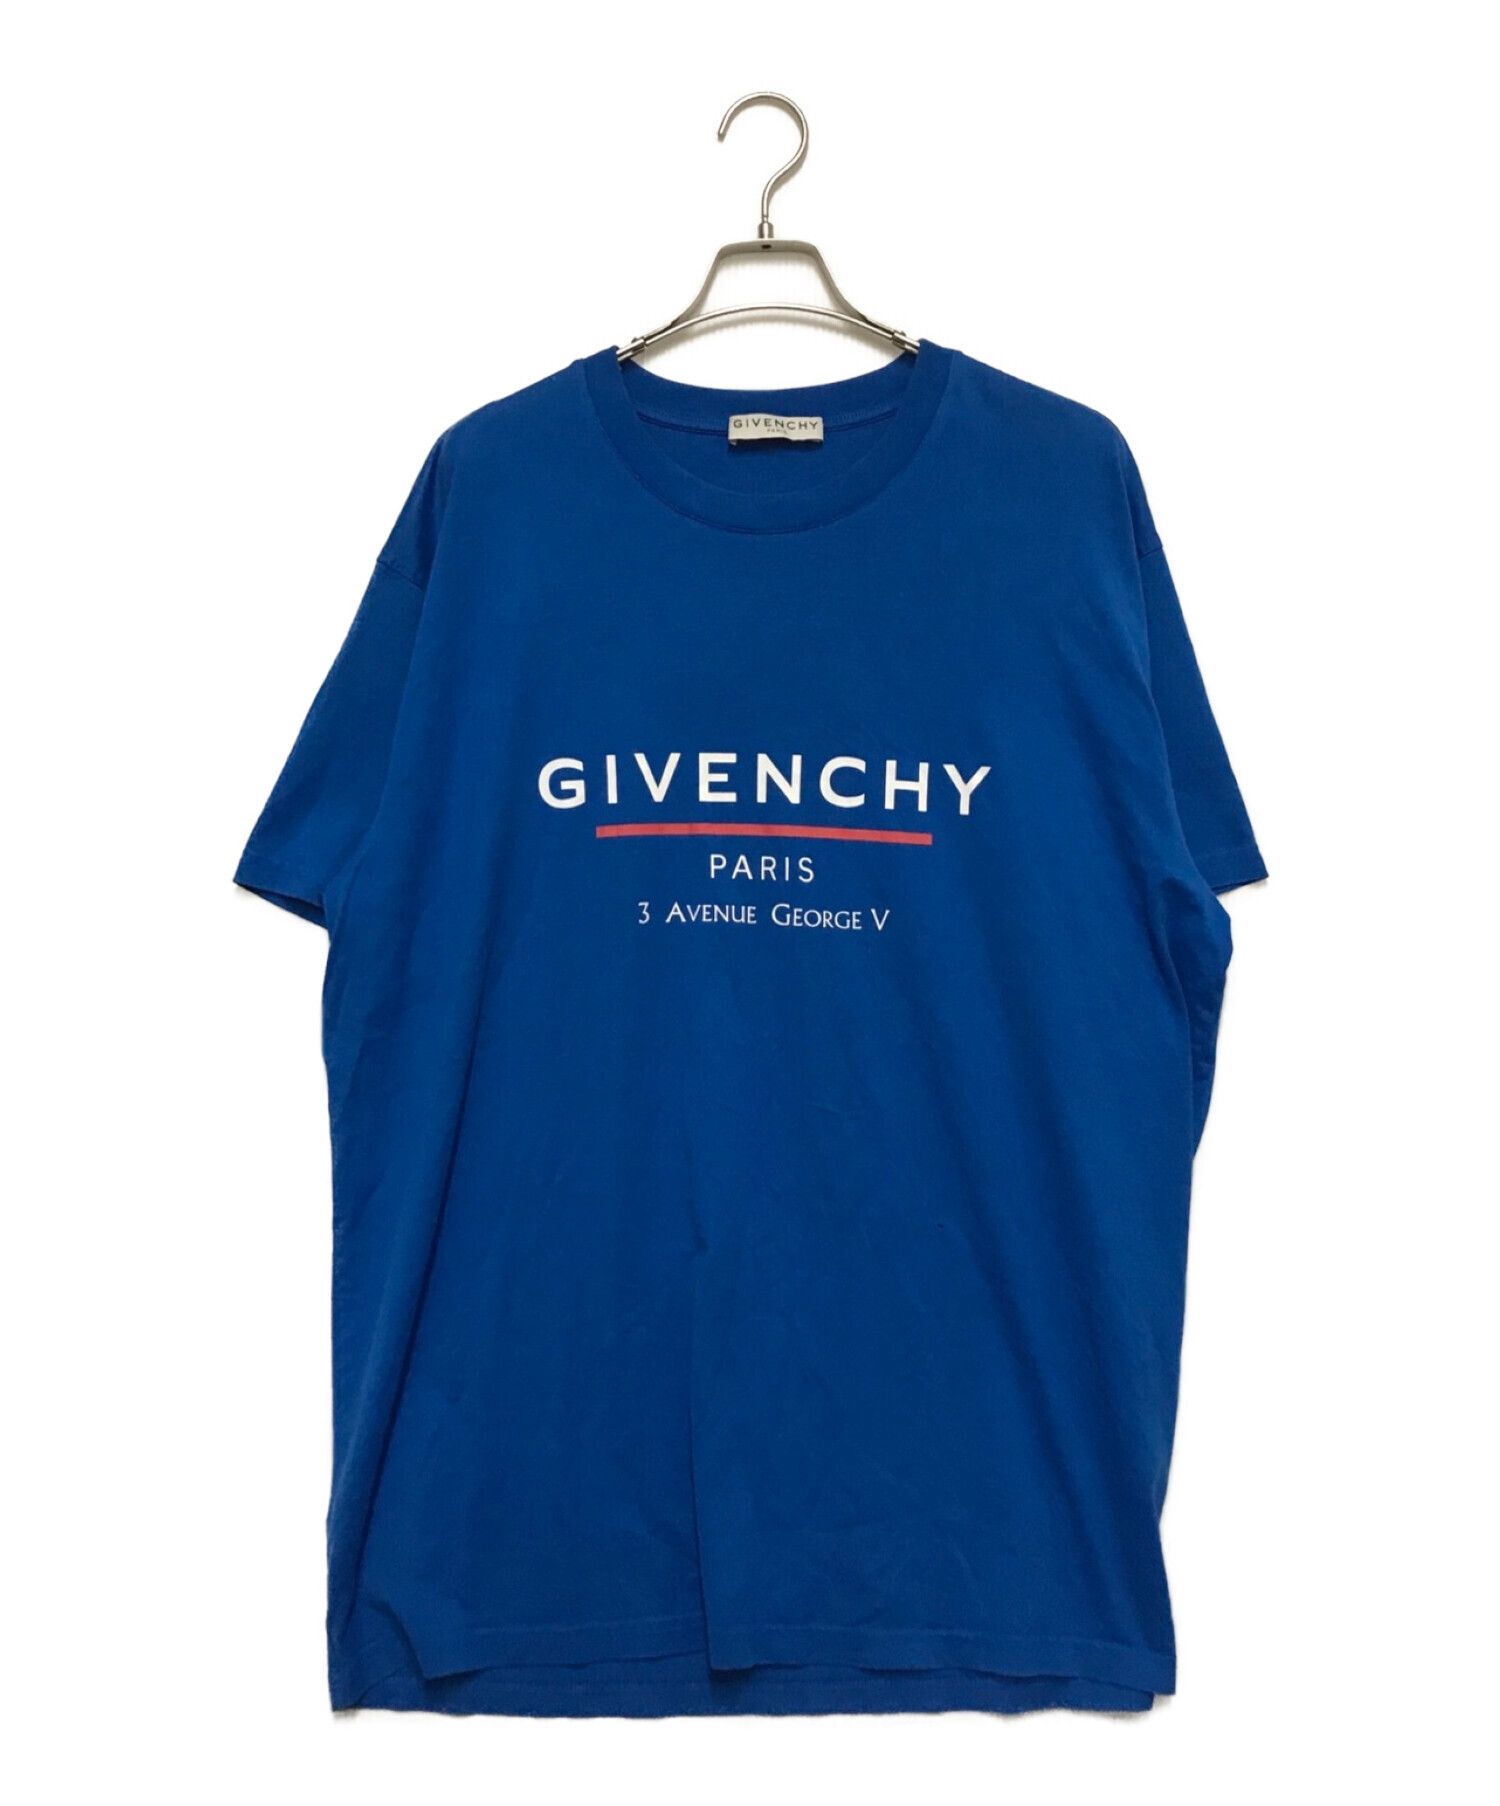 Givenchy フランス限定 Tシャツ 原価10万円 www.pa-bekasi.go.id